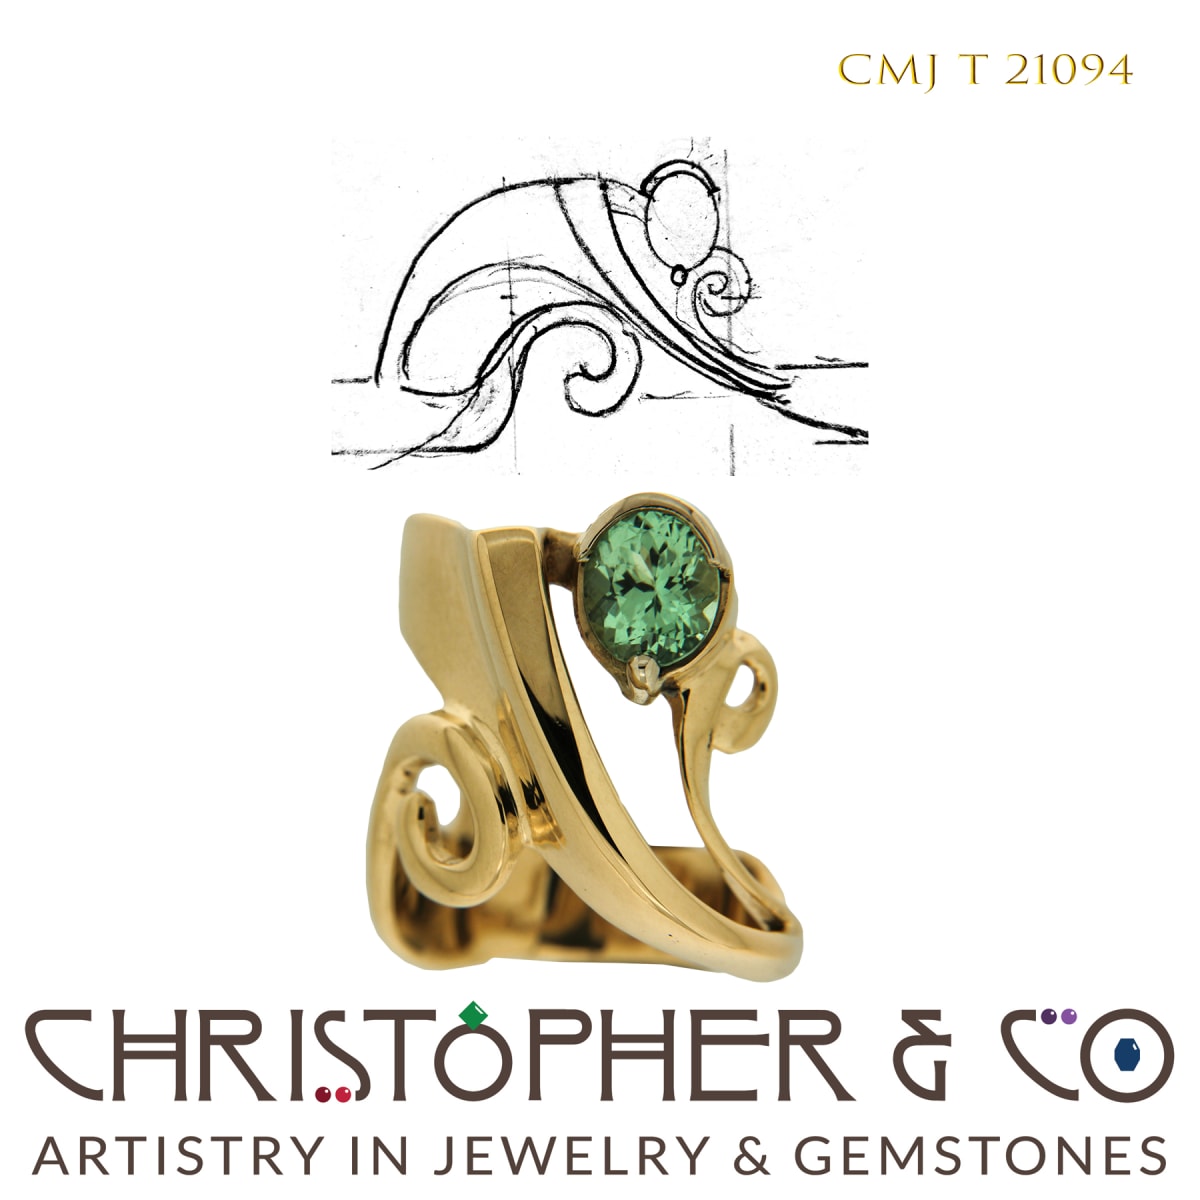 CMJ T 21094  Gold Ring designed by Christopher M. Jupp set with Grossular Garnet  Image: CMJ T 21094  Gold Ring designed by Christopher M. Jupp set with Grossular Garnet